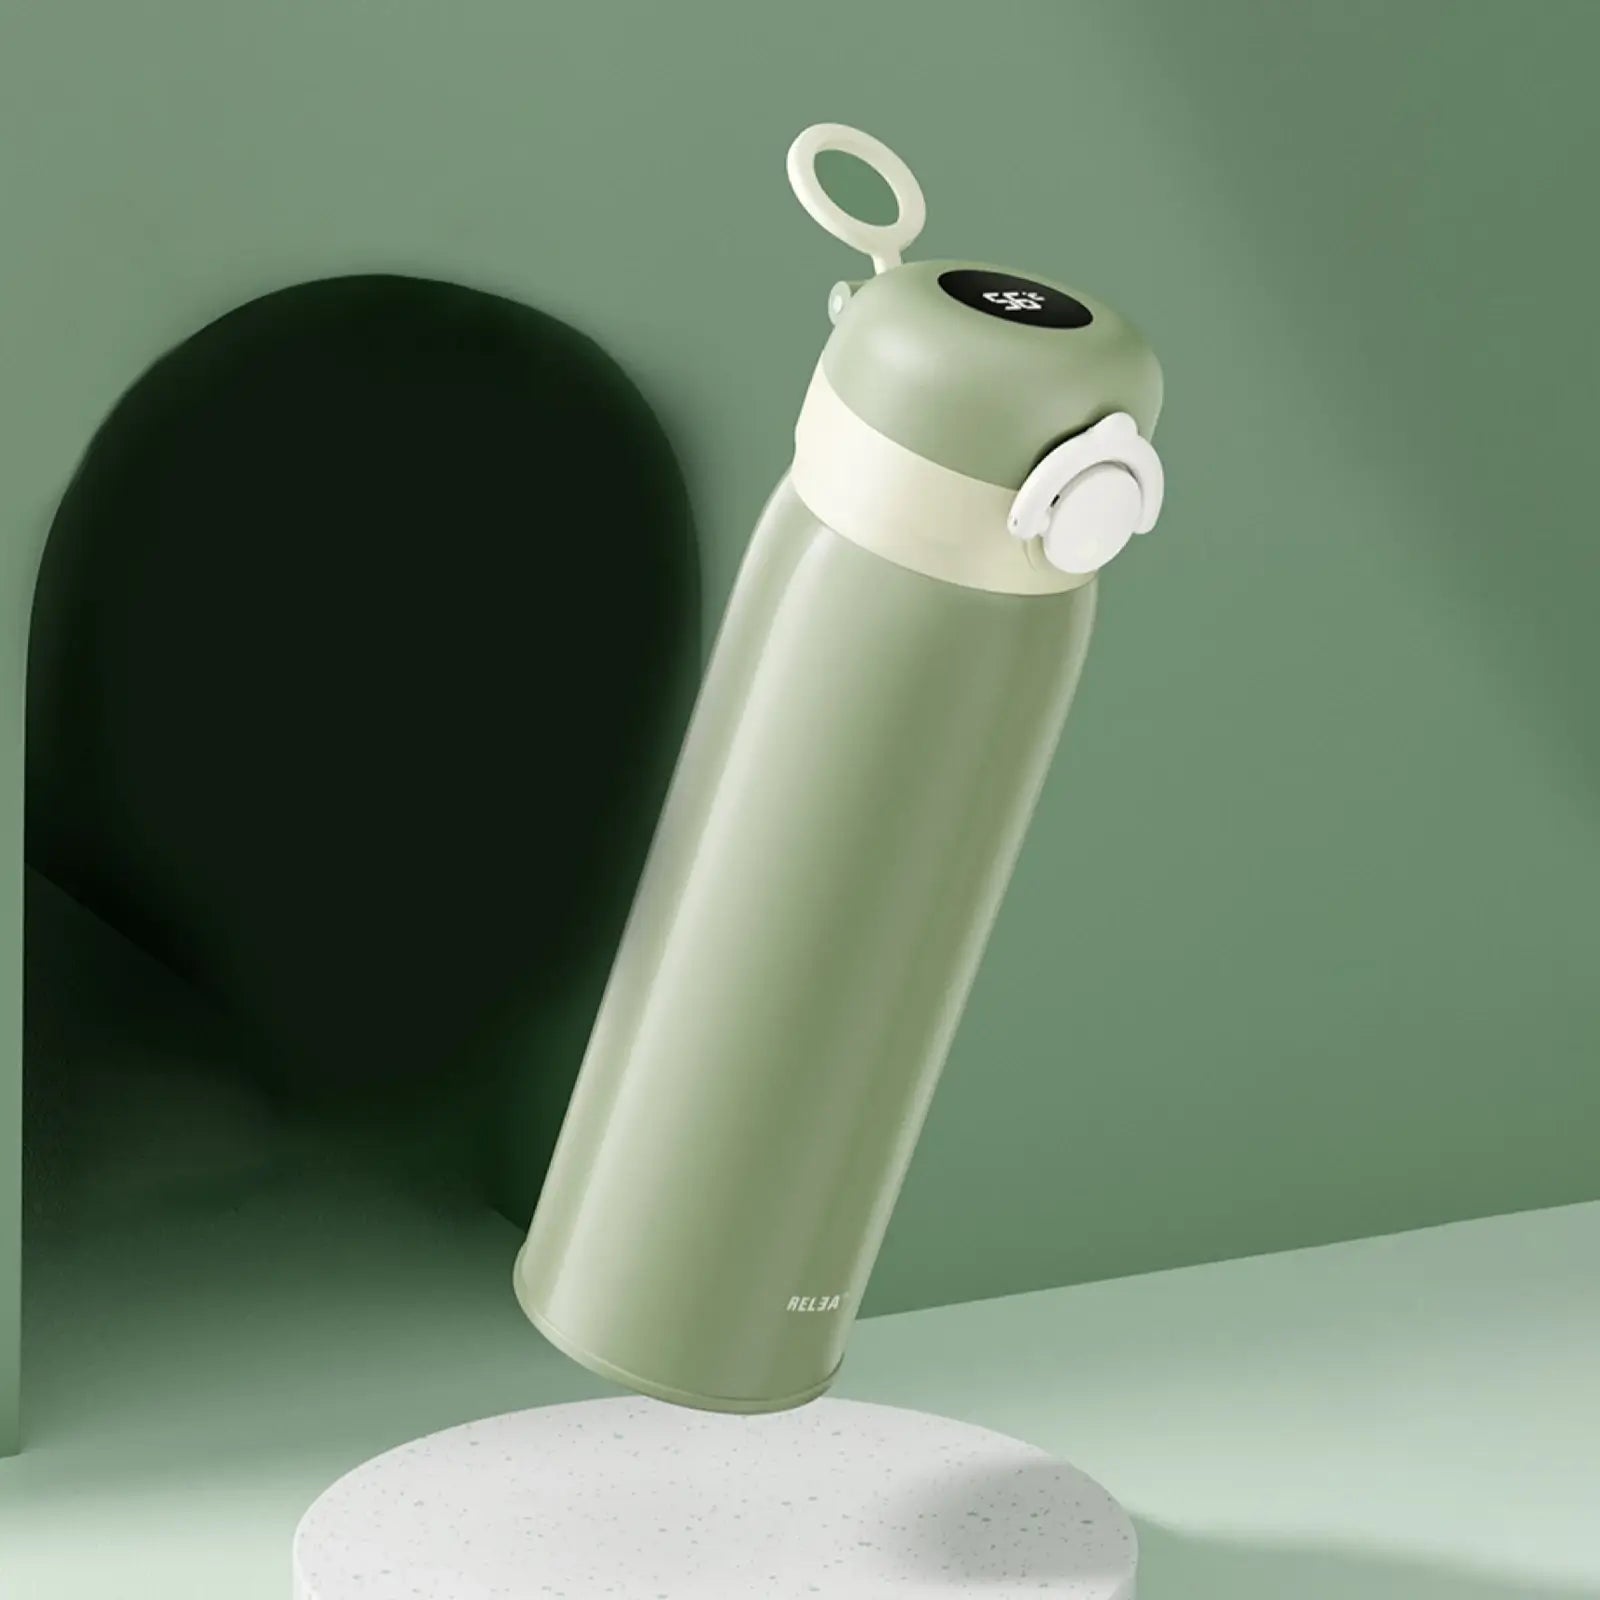 Smart Insulated Water Bottle - Cool Gadget